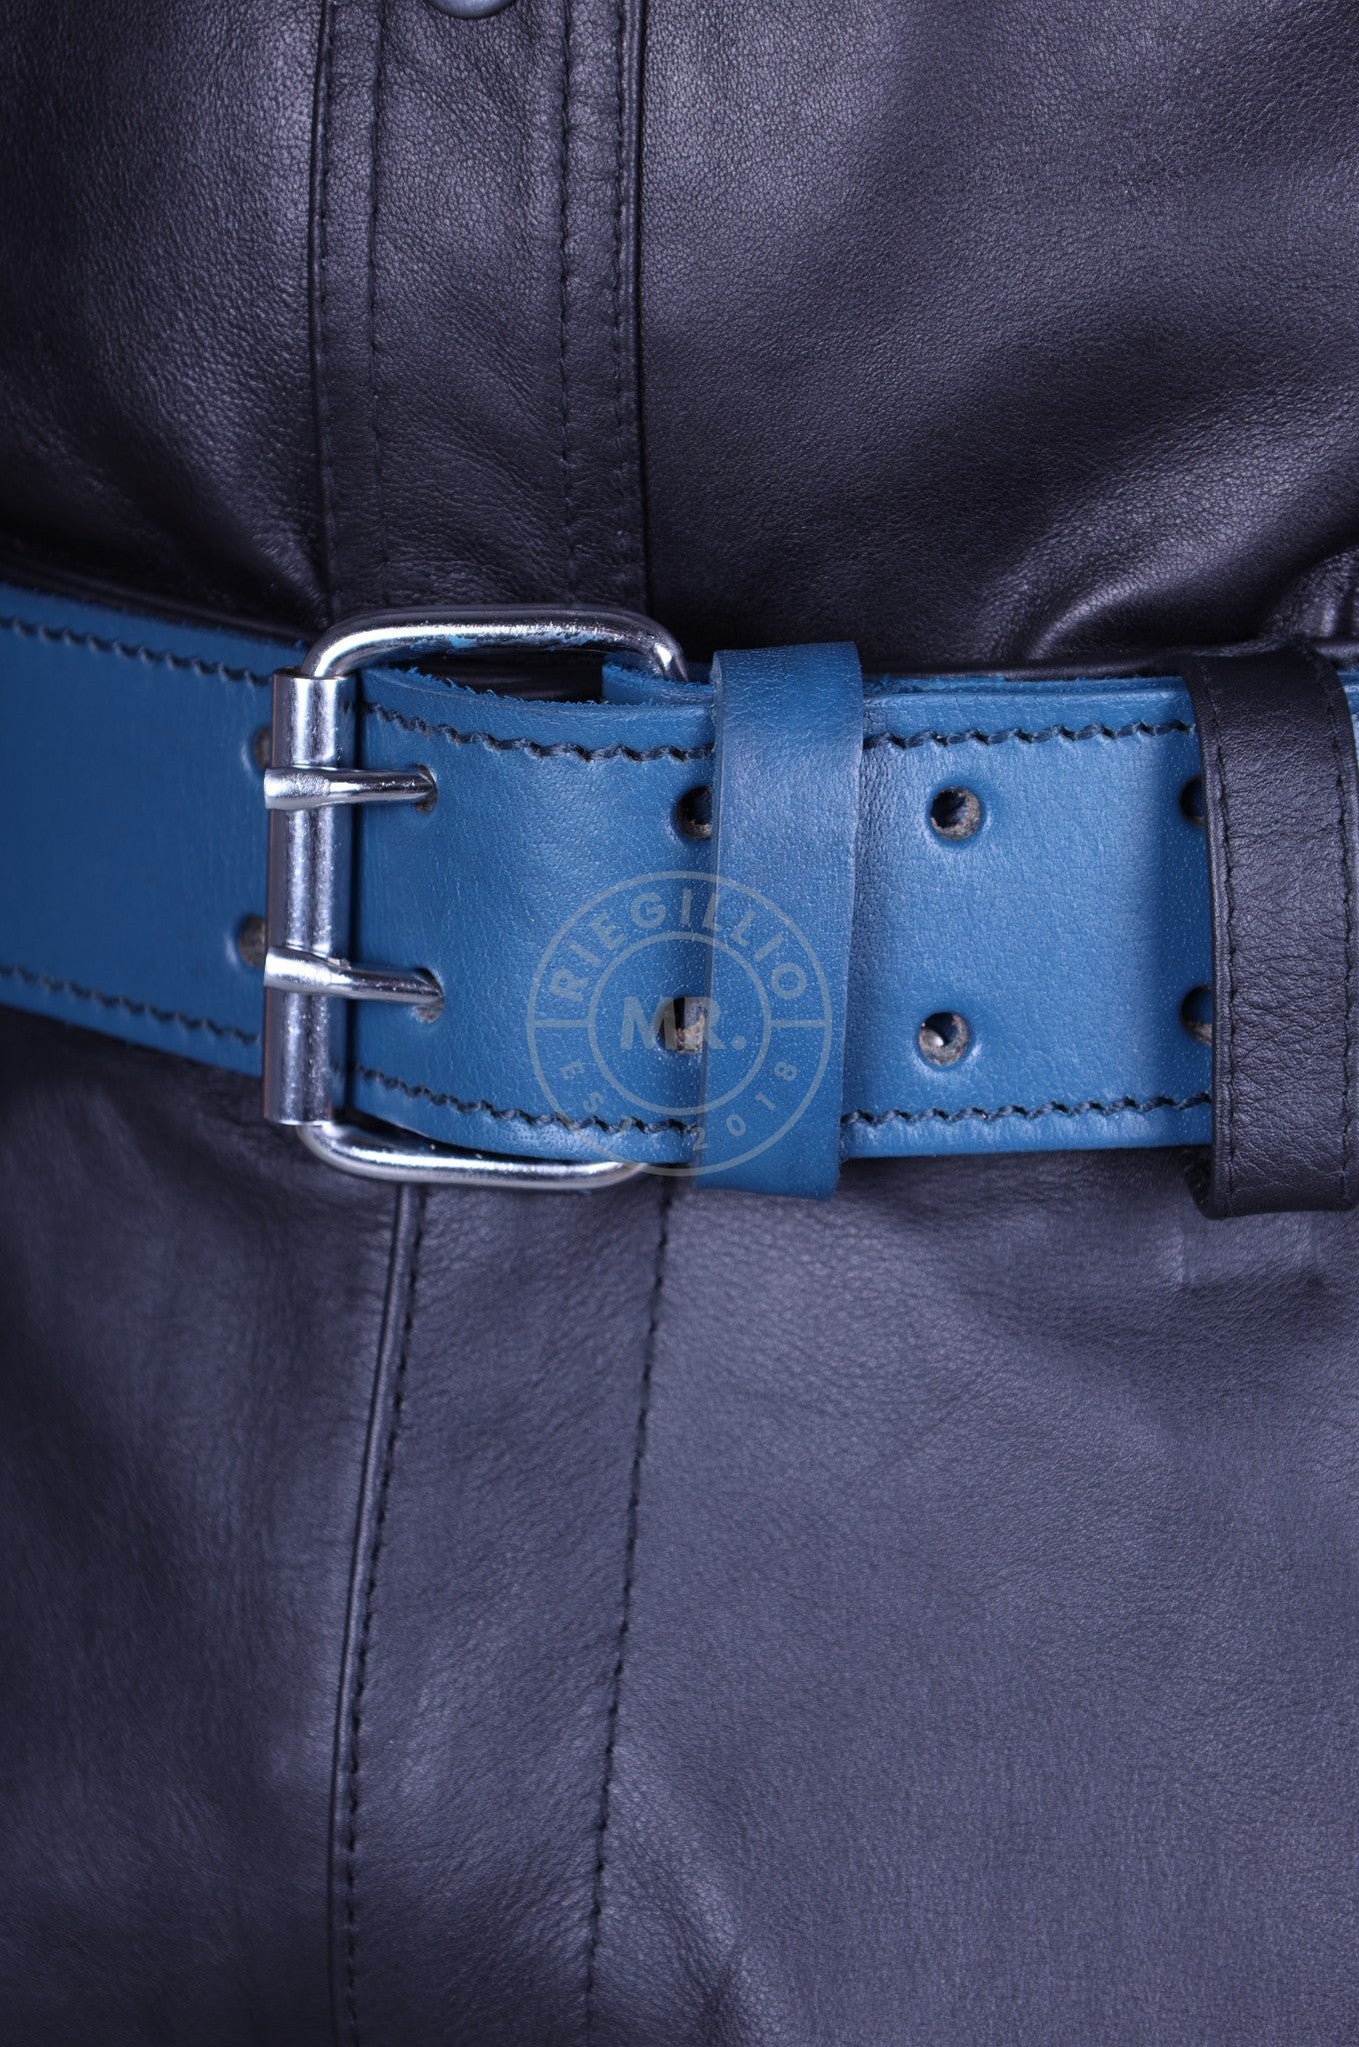 Jeans Blue Leather Belt at MR. Riegillio